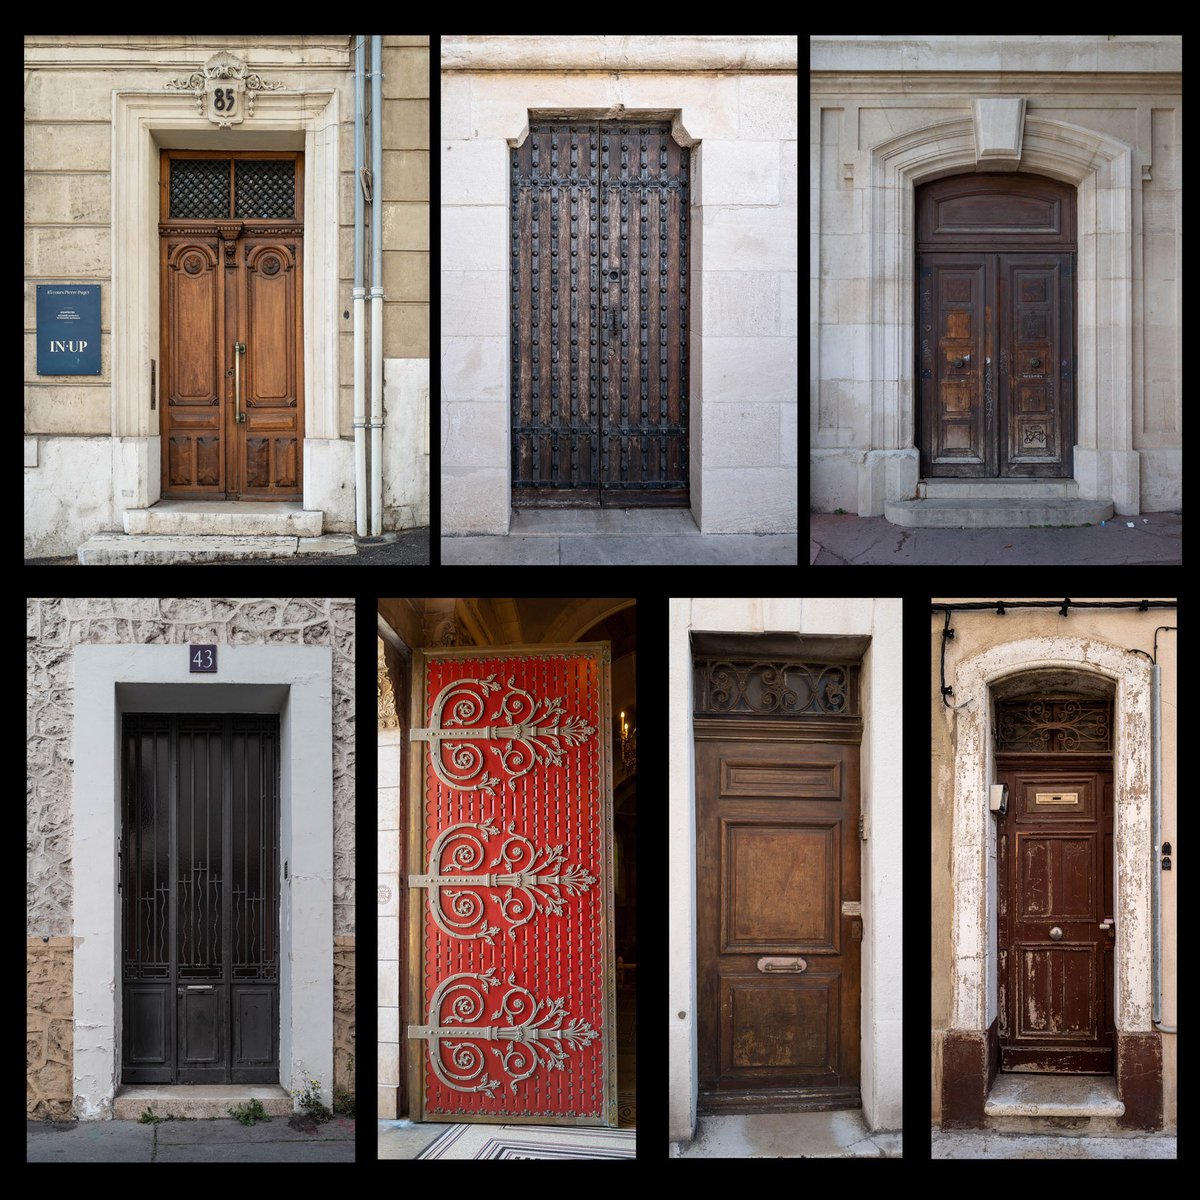 Doors of Marseille 

#IamATraveler
#beautifuldestinations
#travelandlife
#leica
#LeicaSociety
#theworldshotz
#travelandleisure
#PortraitsByRod